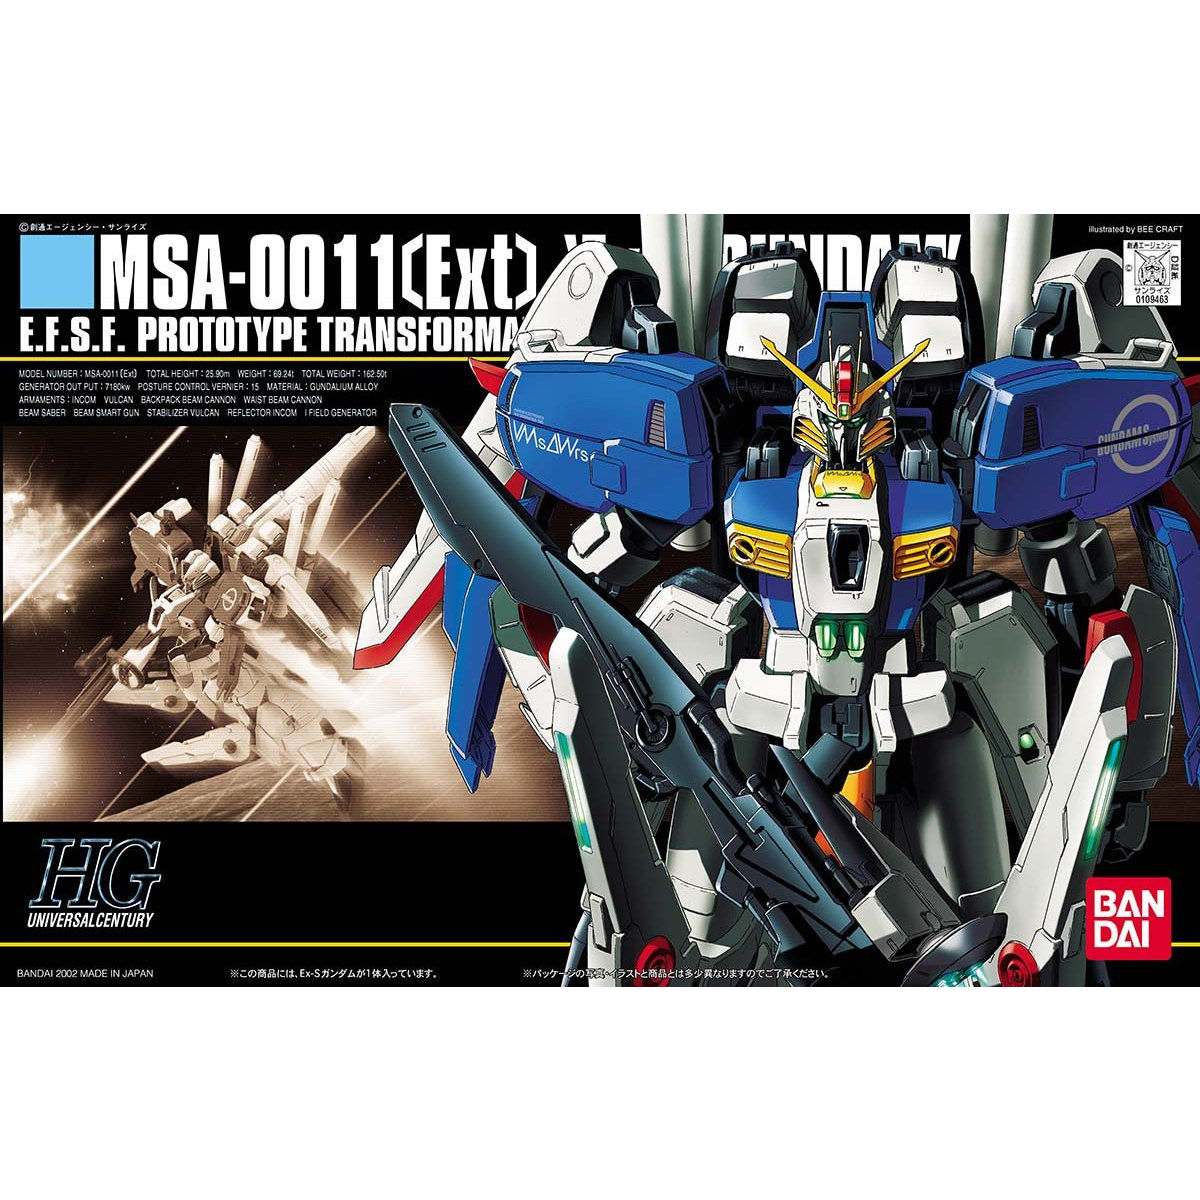 Bandai 0109463 1/144 HGUC HG Universal Century Series: #029 MSA-0011 (Ext) Ex-S Gundam Transformable Mobile Suit